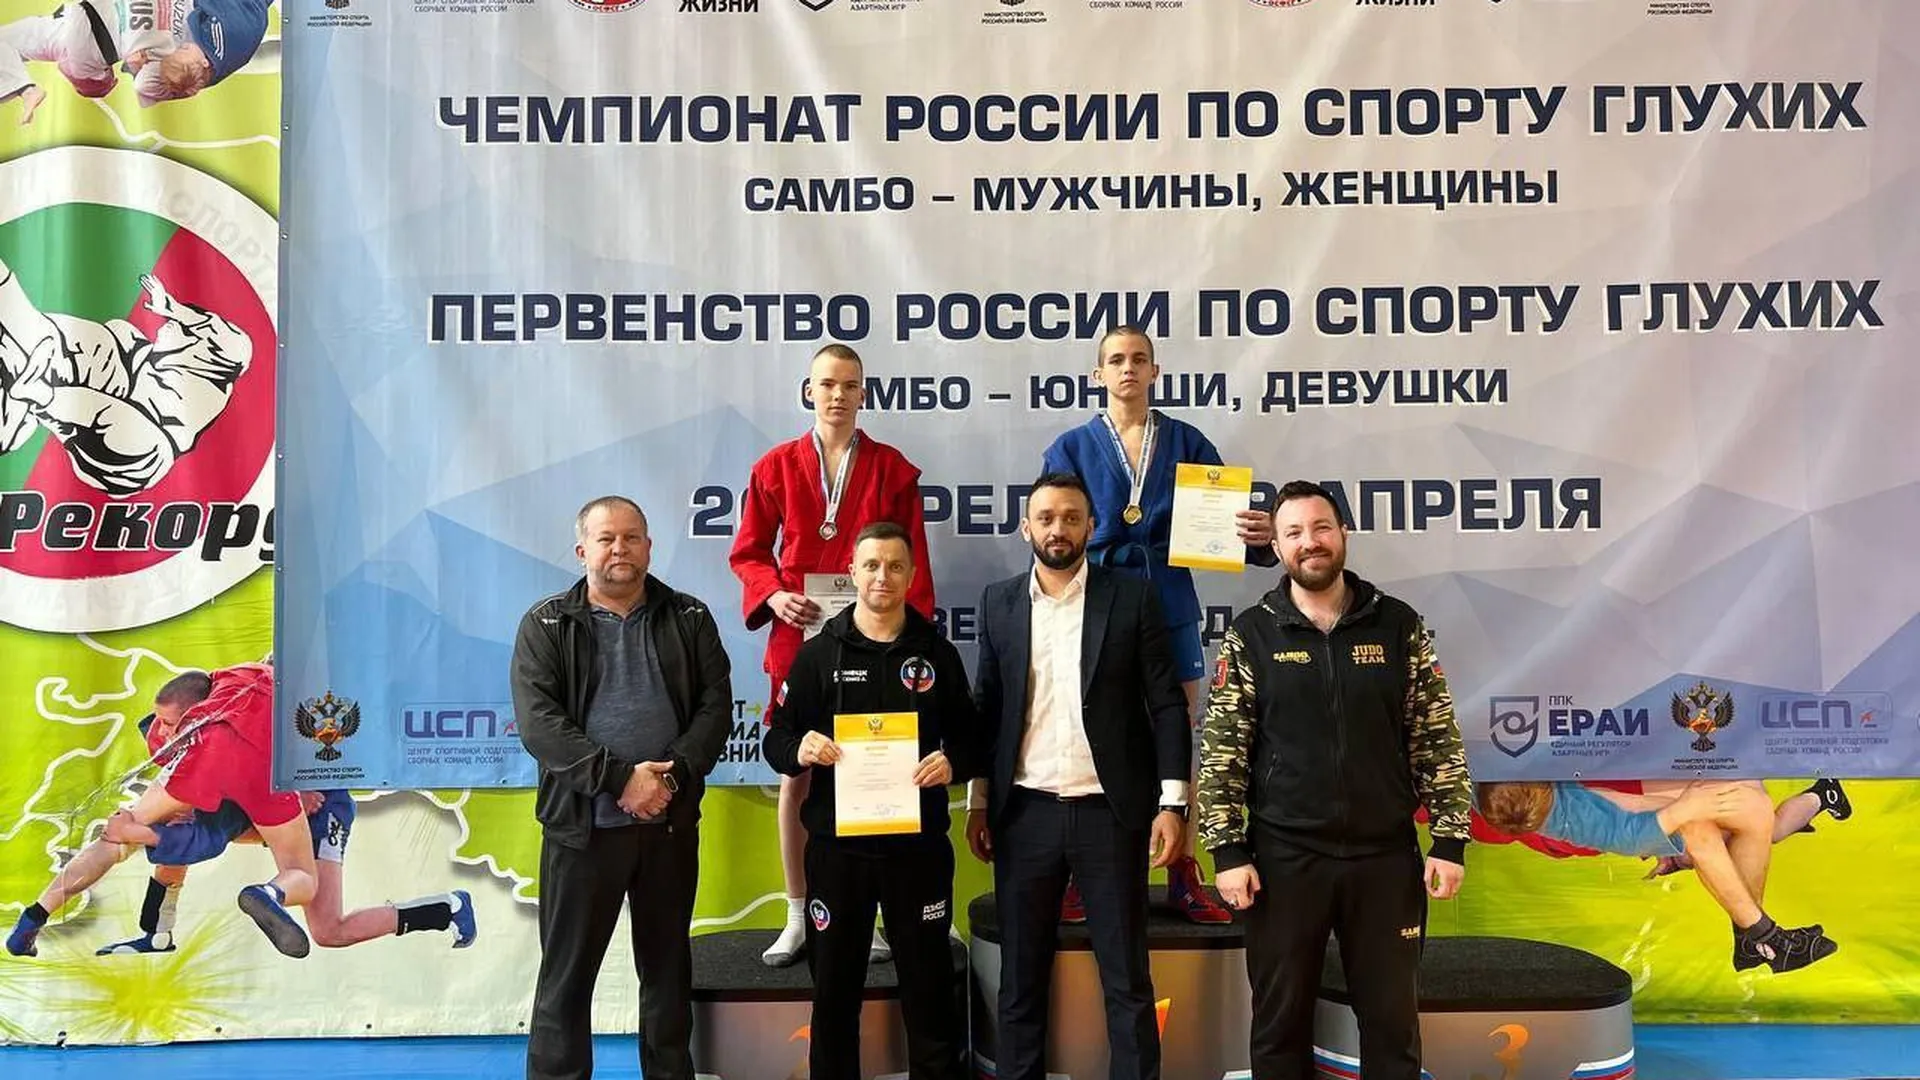 Самбисты из Сергиева Посада победили на чемпионате России